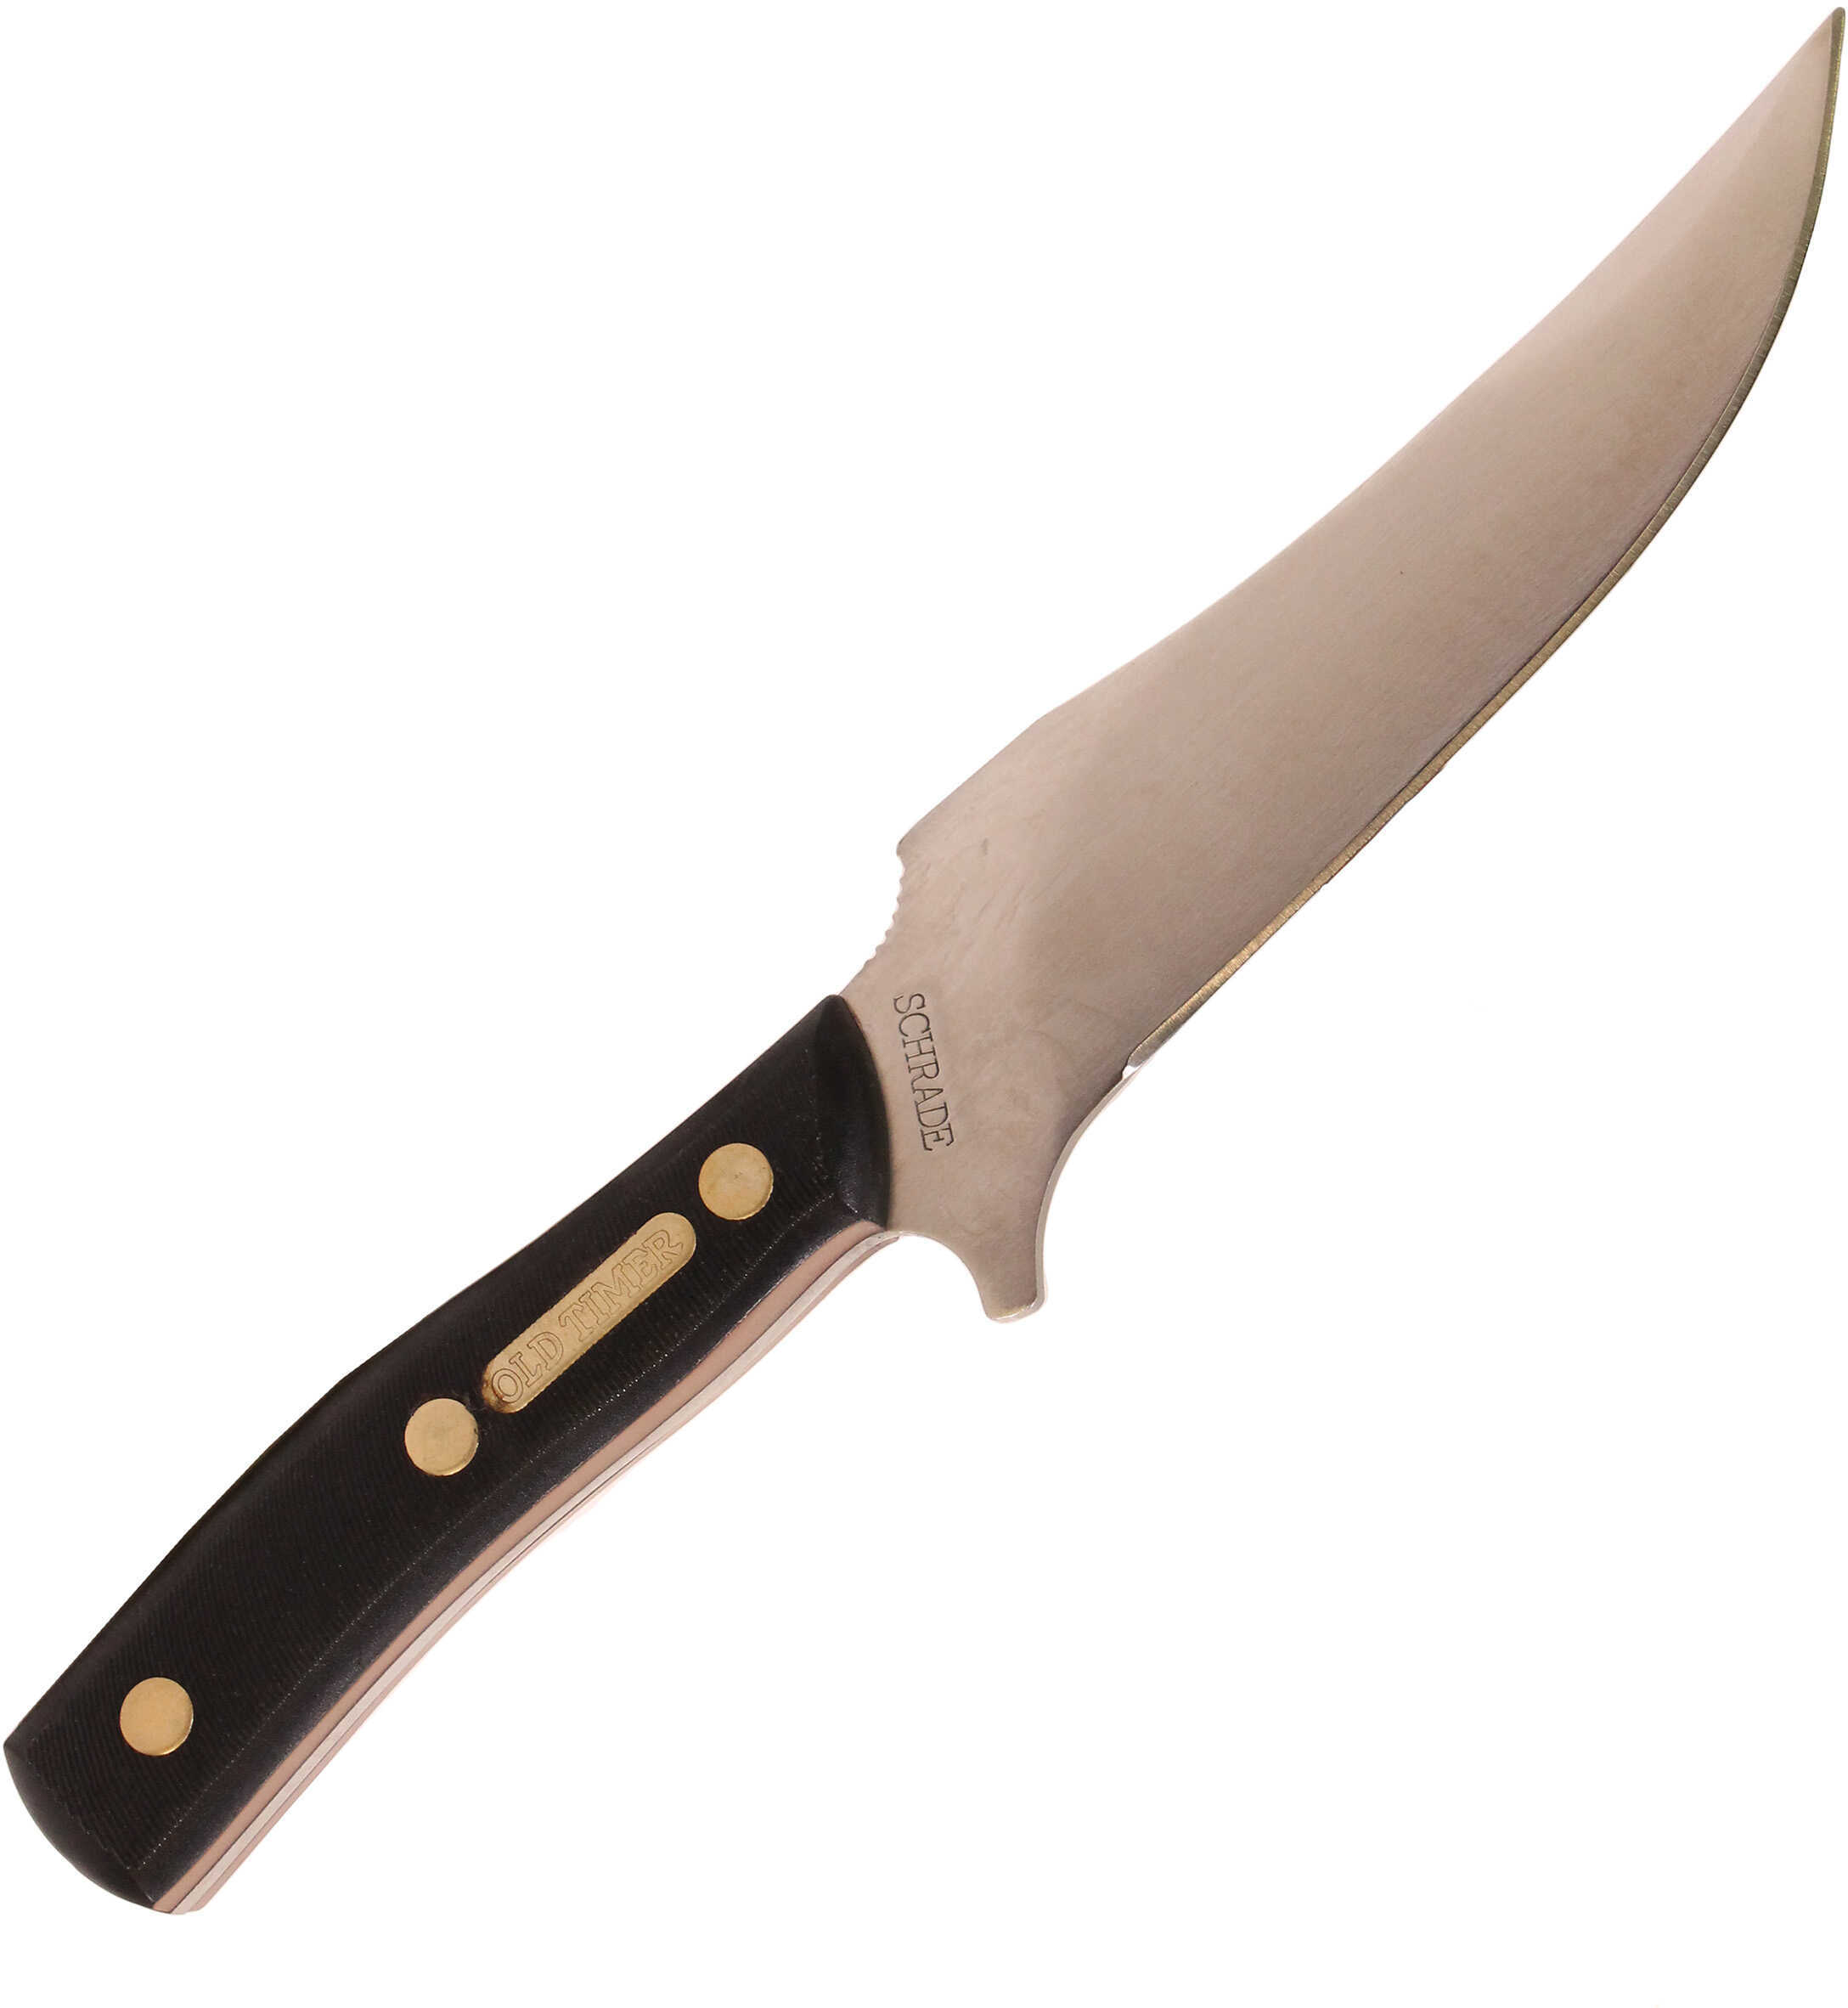 Schrade Knife DEERSLAYER 5.6" Stainless DELRIN W/Sheath